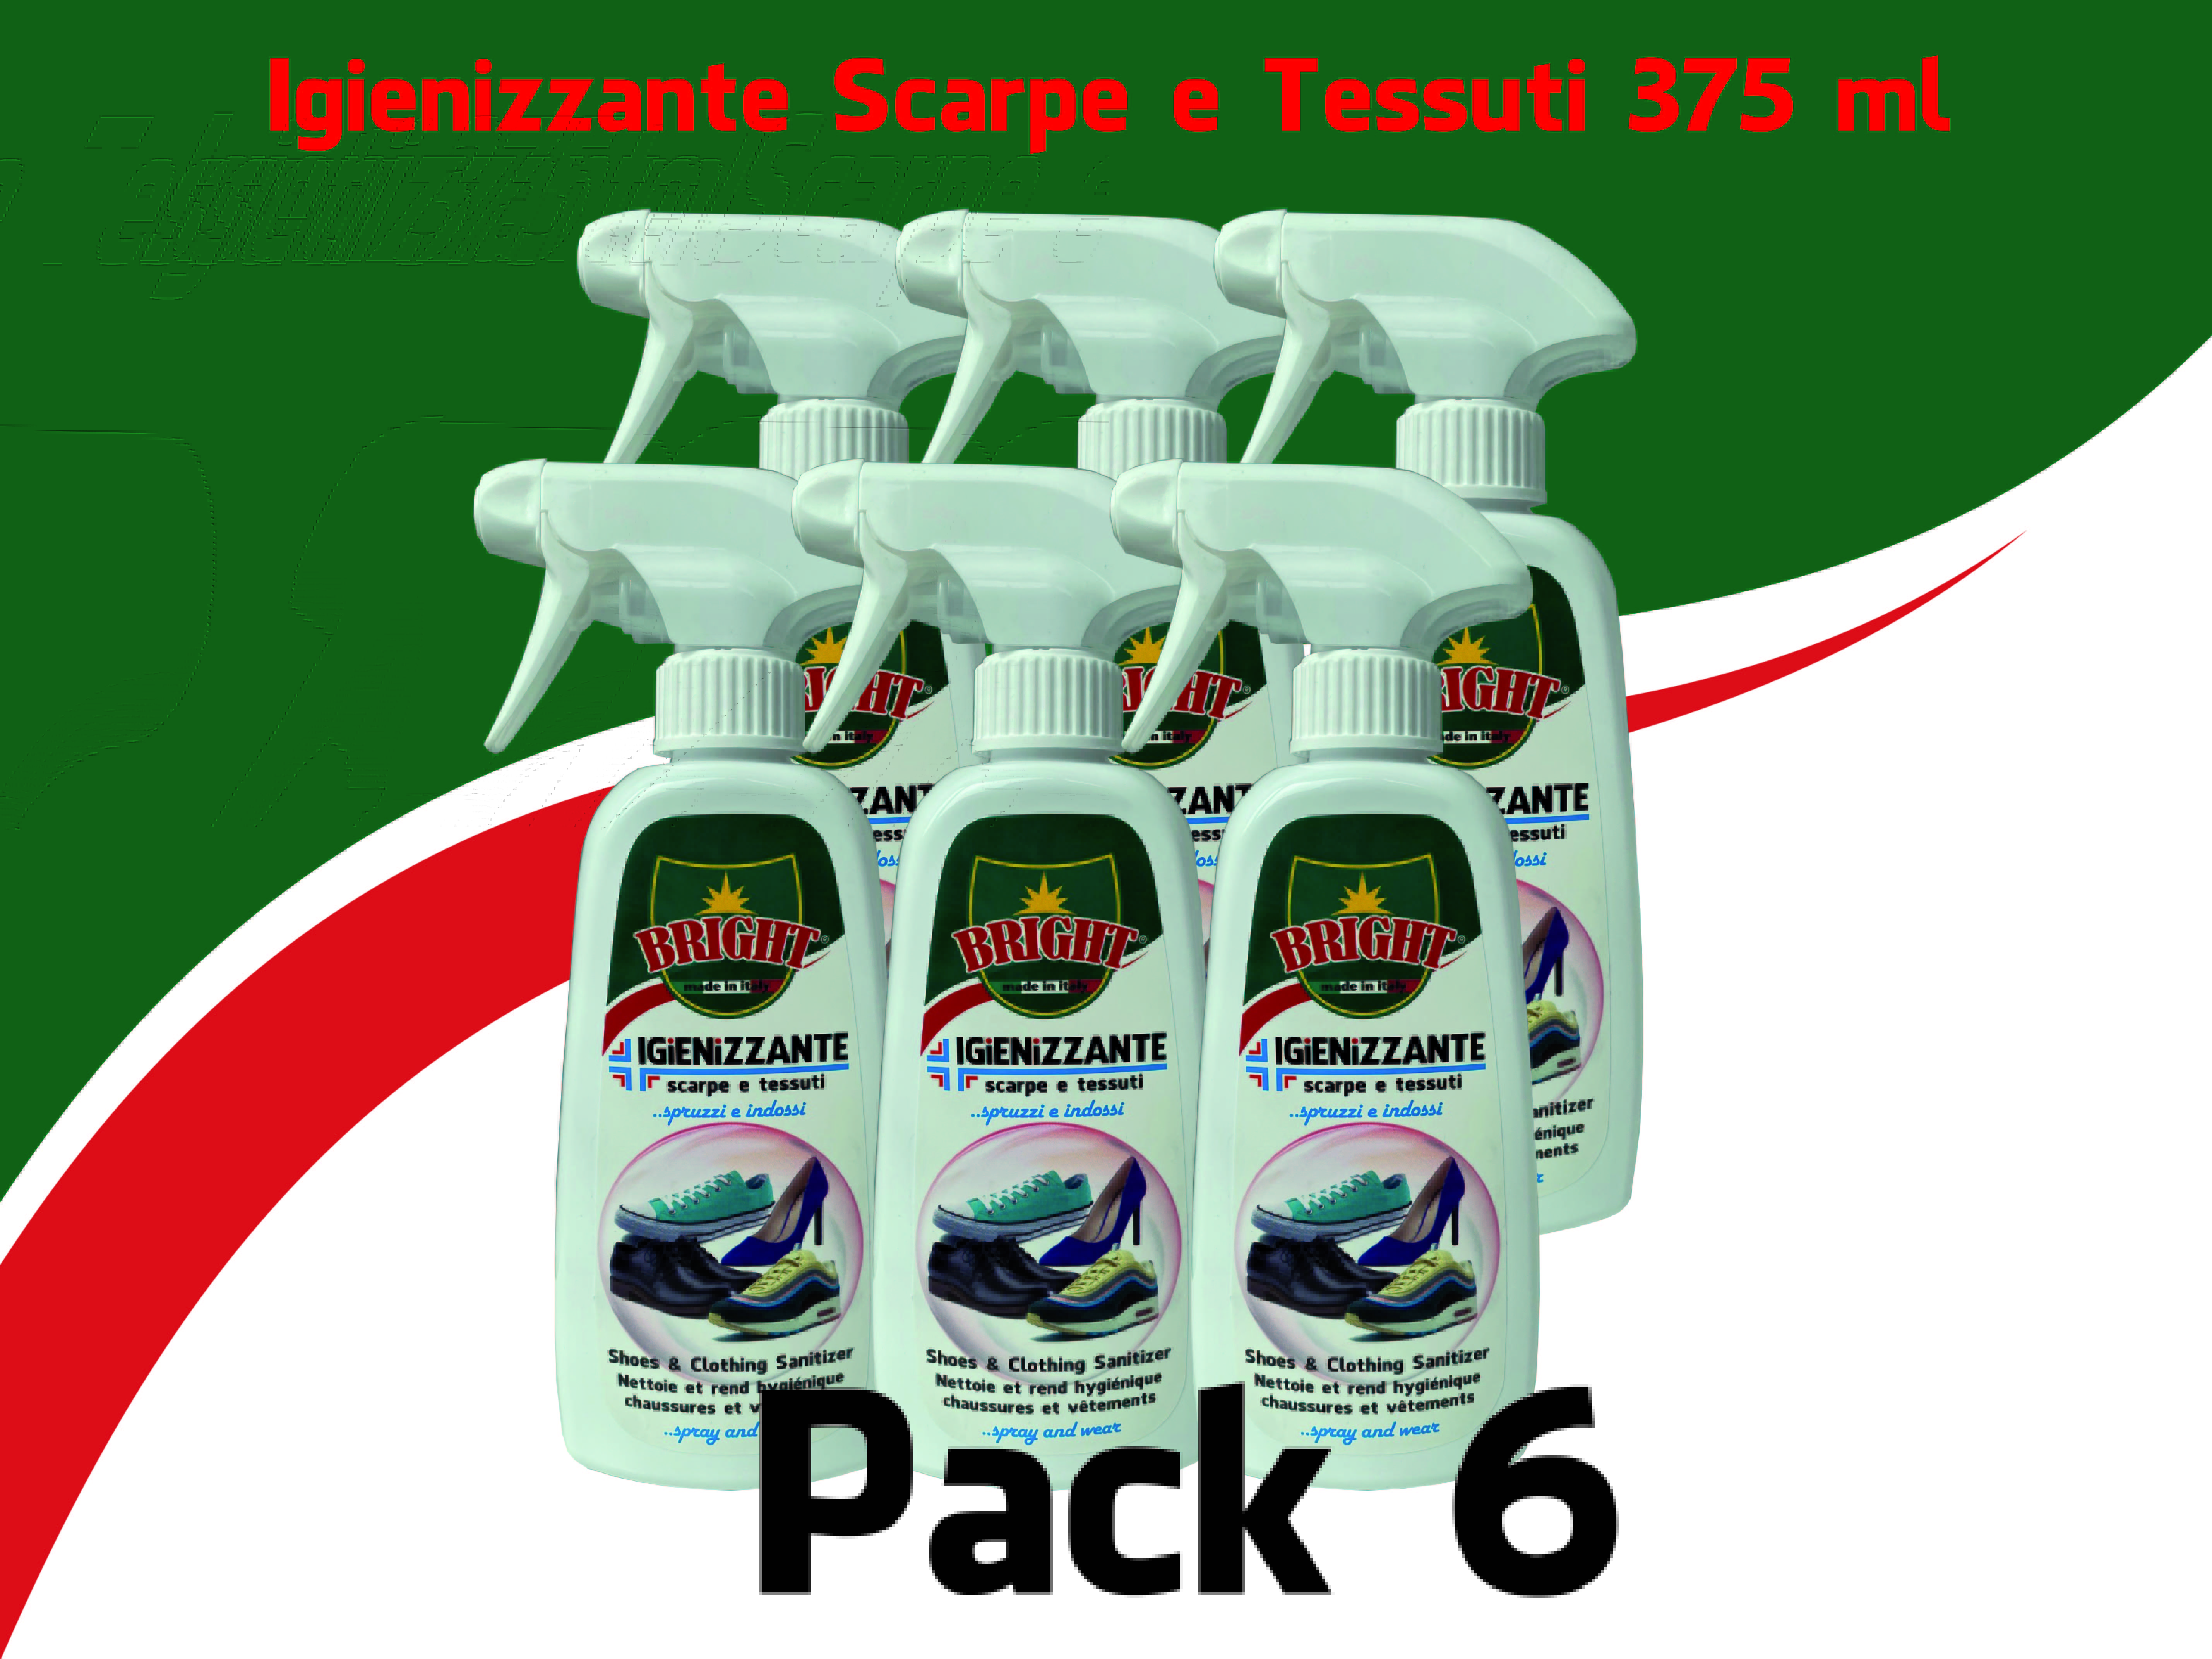 Igienizzante Scarpe e tessuti 375 ml PACK 6 – Technowax SRL Italia